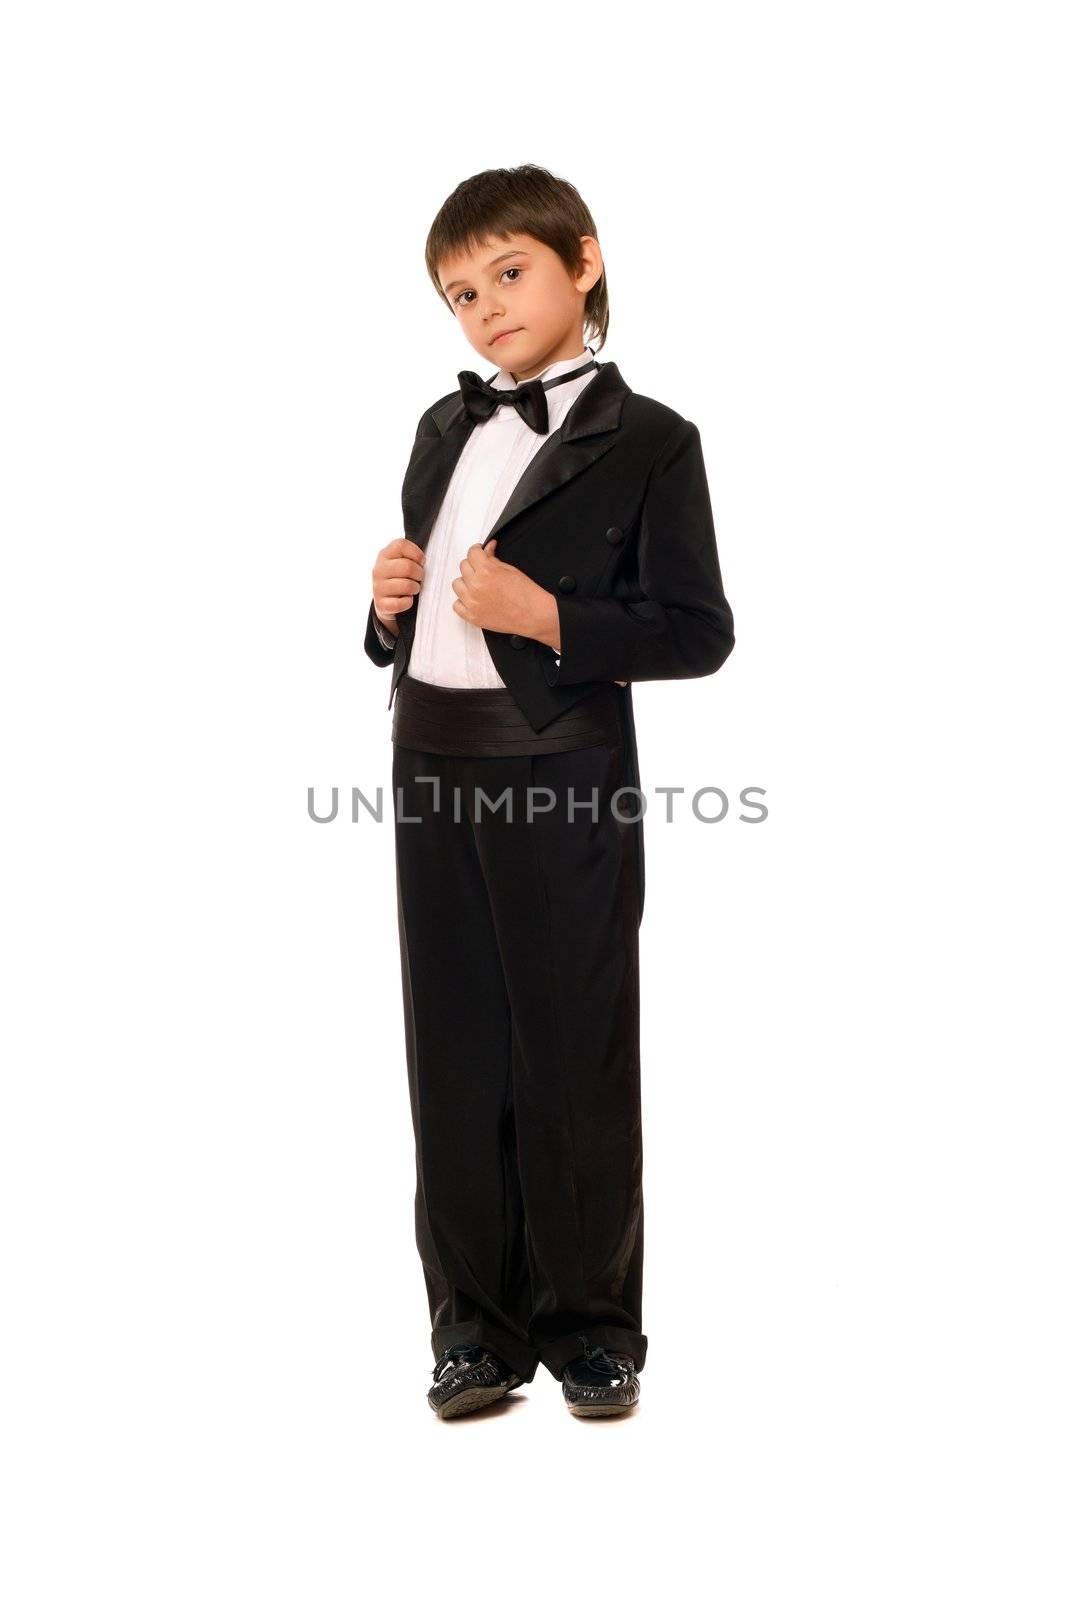 Little boy in a tuxedo. Isolated